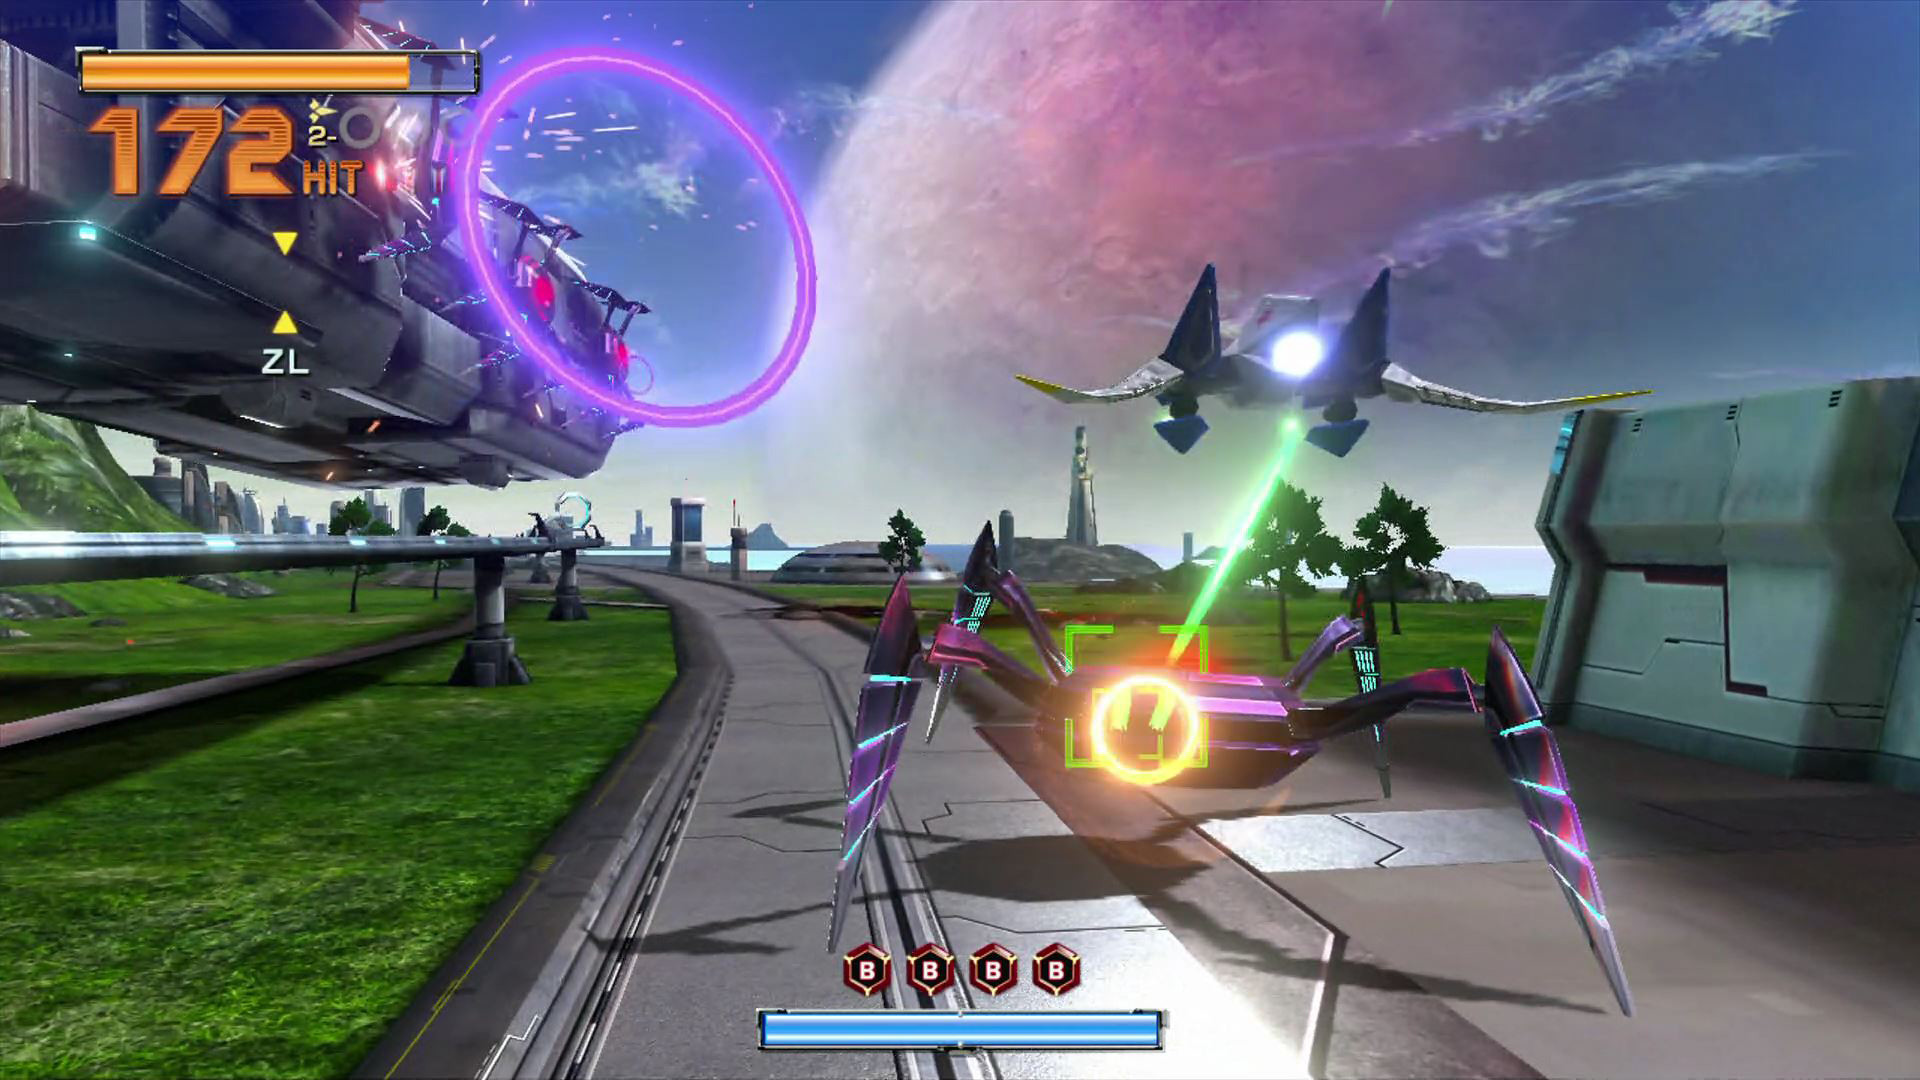 Star Fox Zero Wii U and Star Fox Guard Wii U eShop are now available worldwide